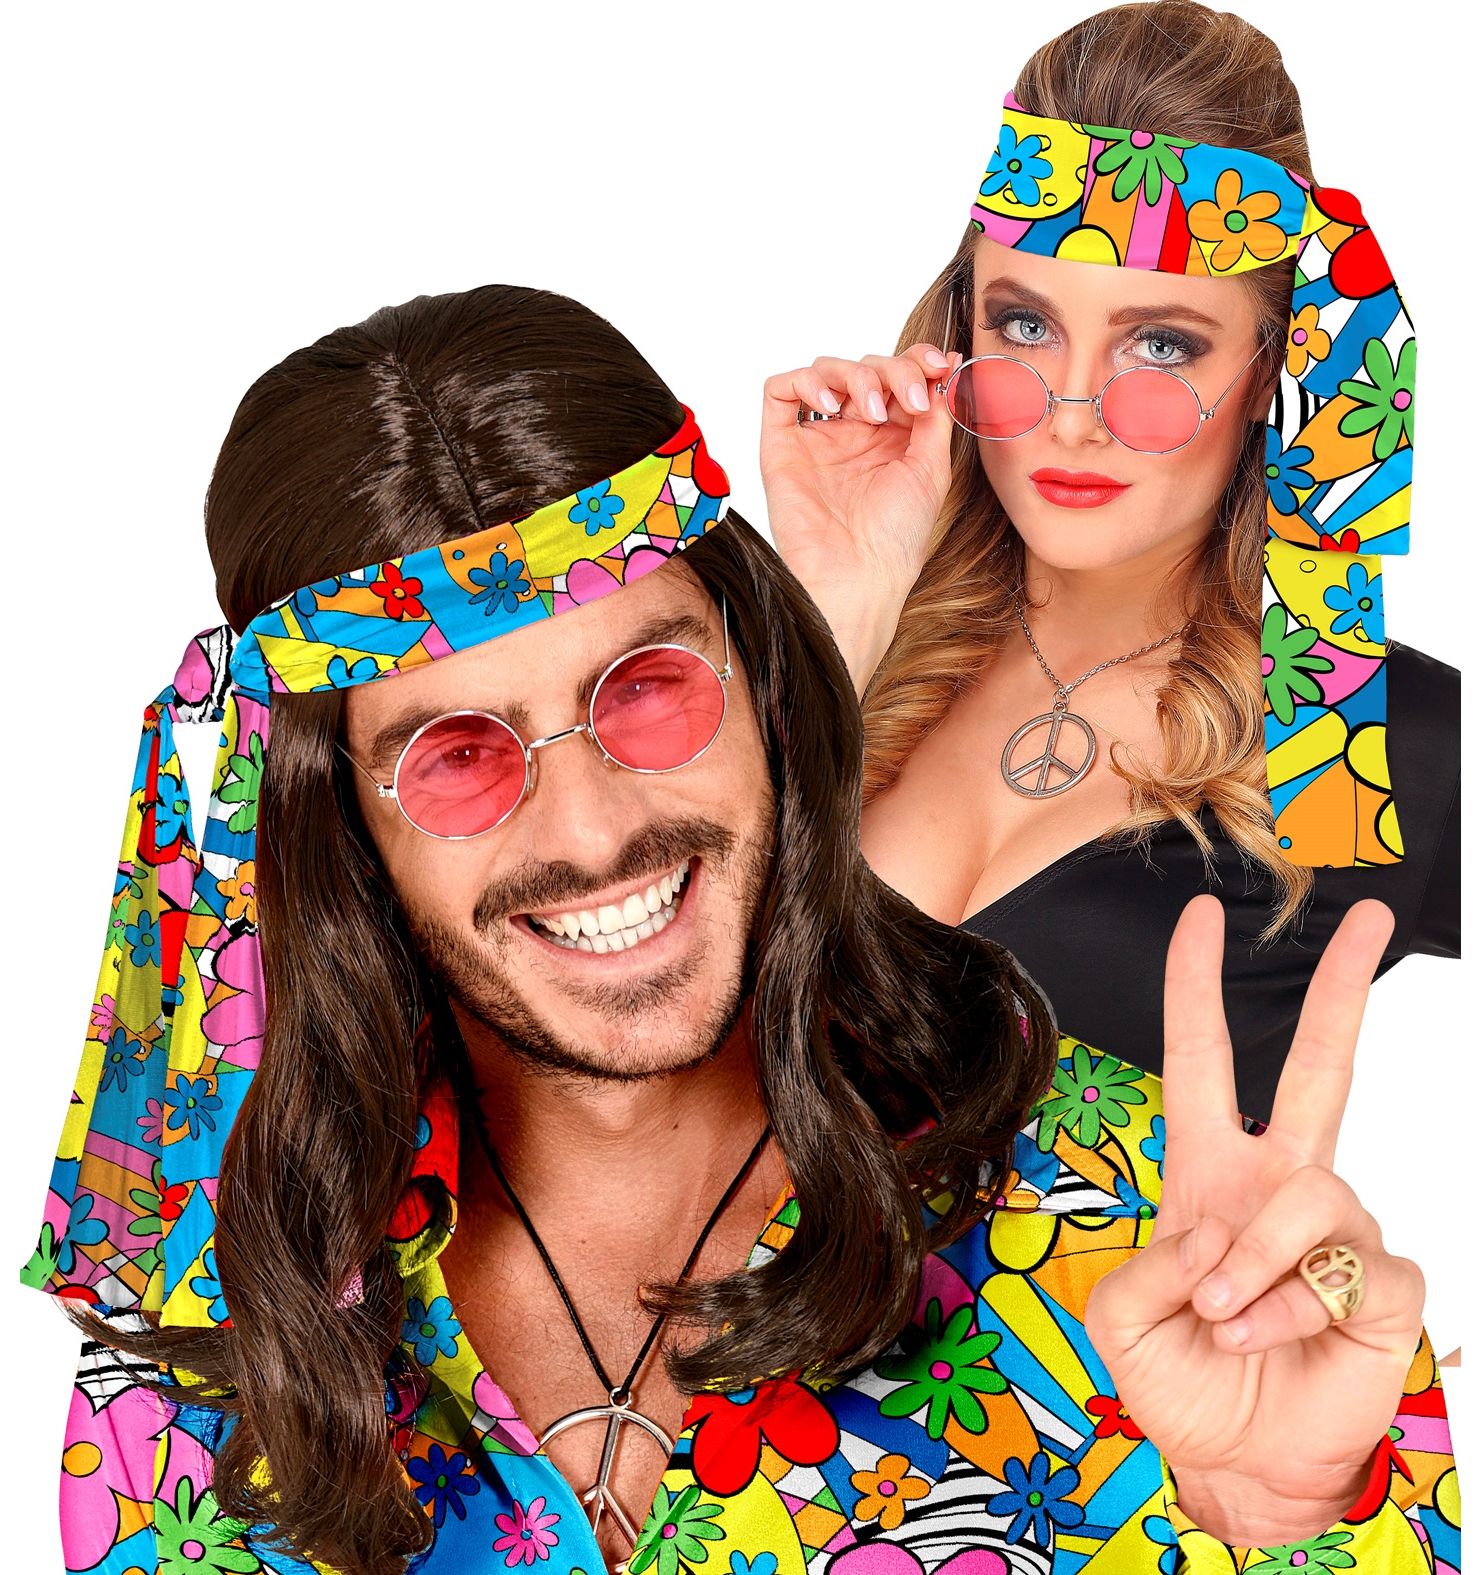 Flower power hippie hoofdband